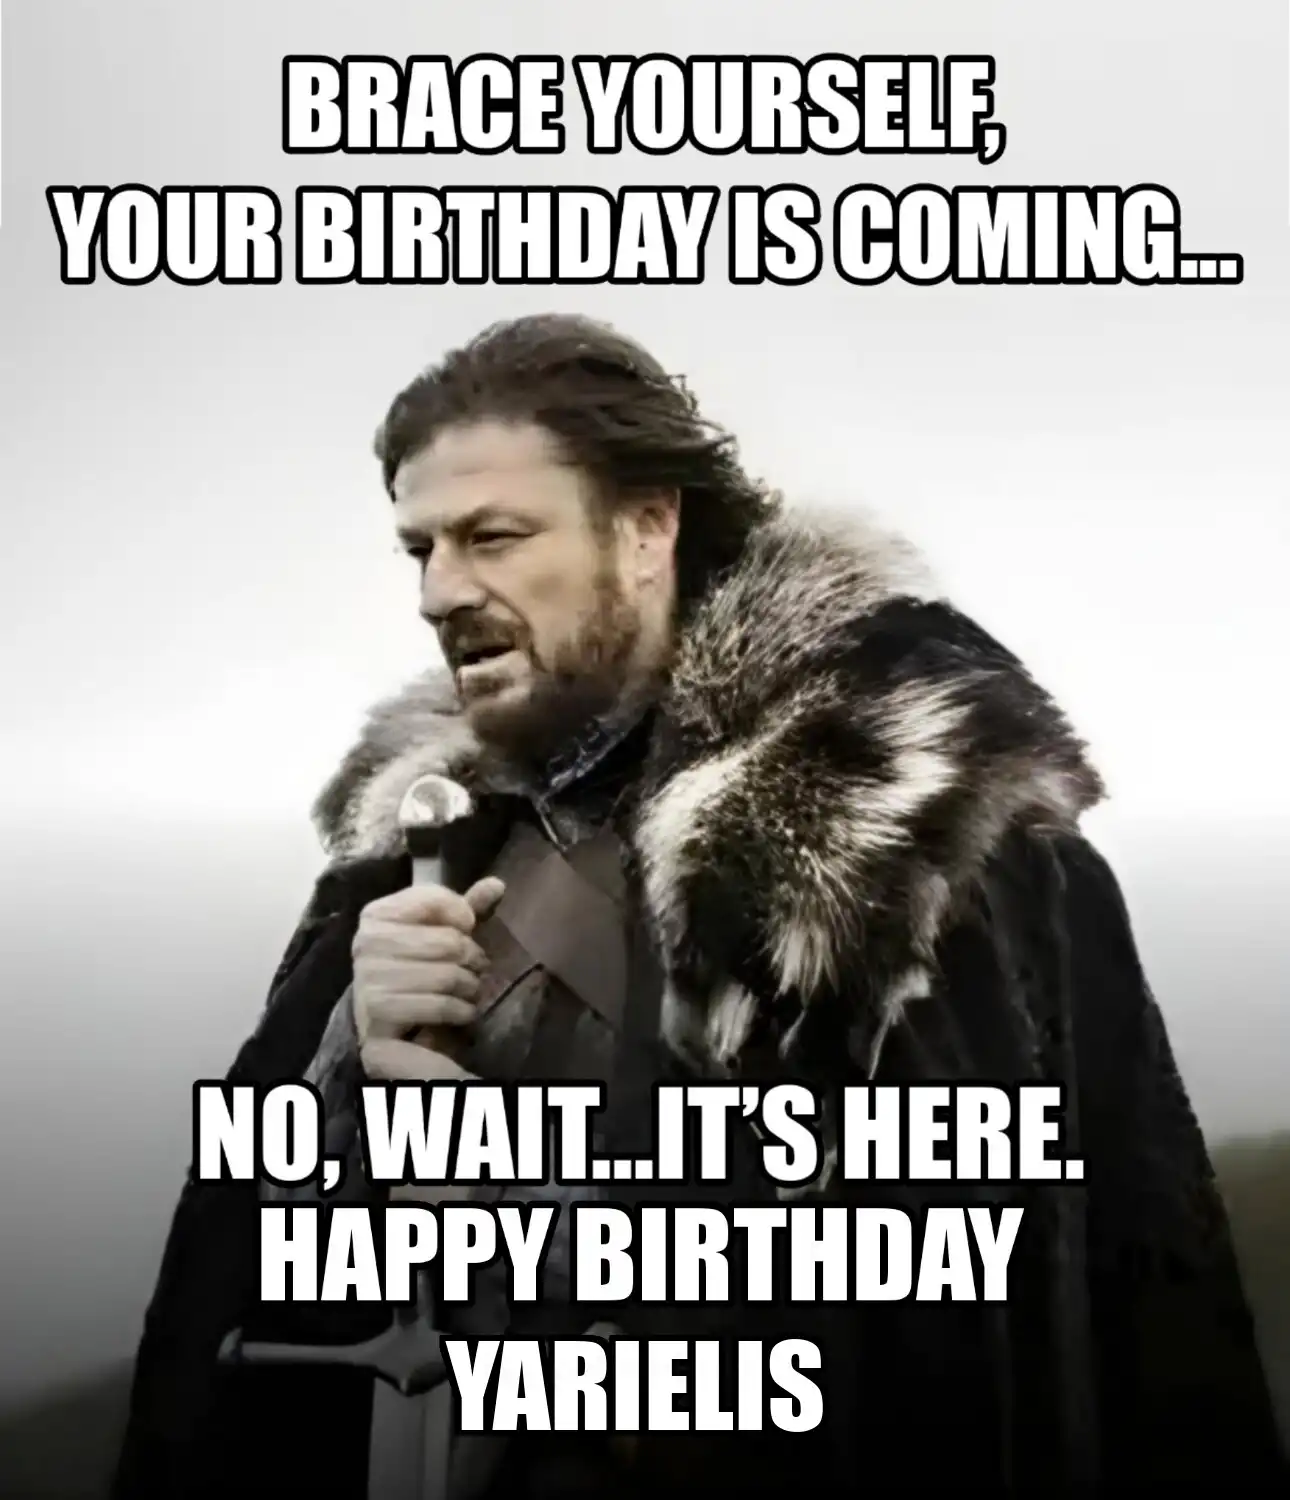 Happy Birthday Yarielis Brace Yourself Your Birthday Is Coming Meme